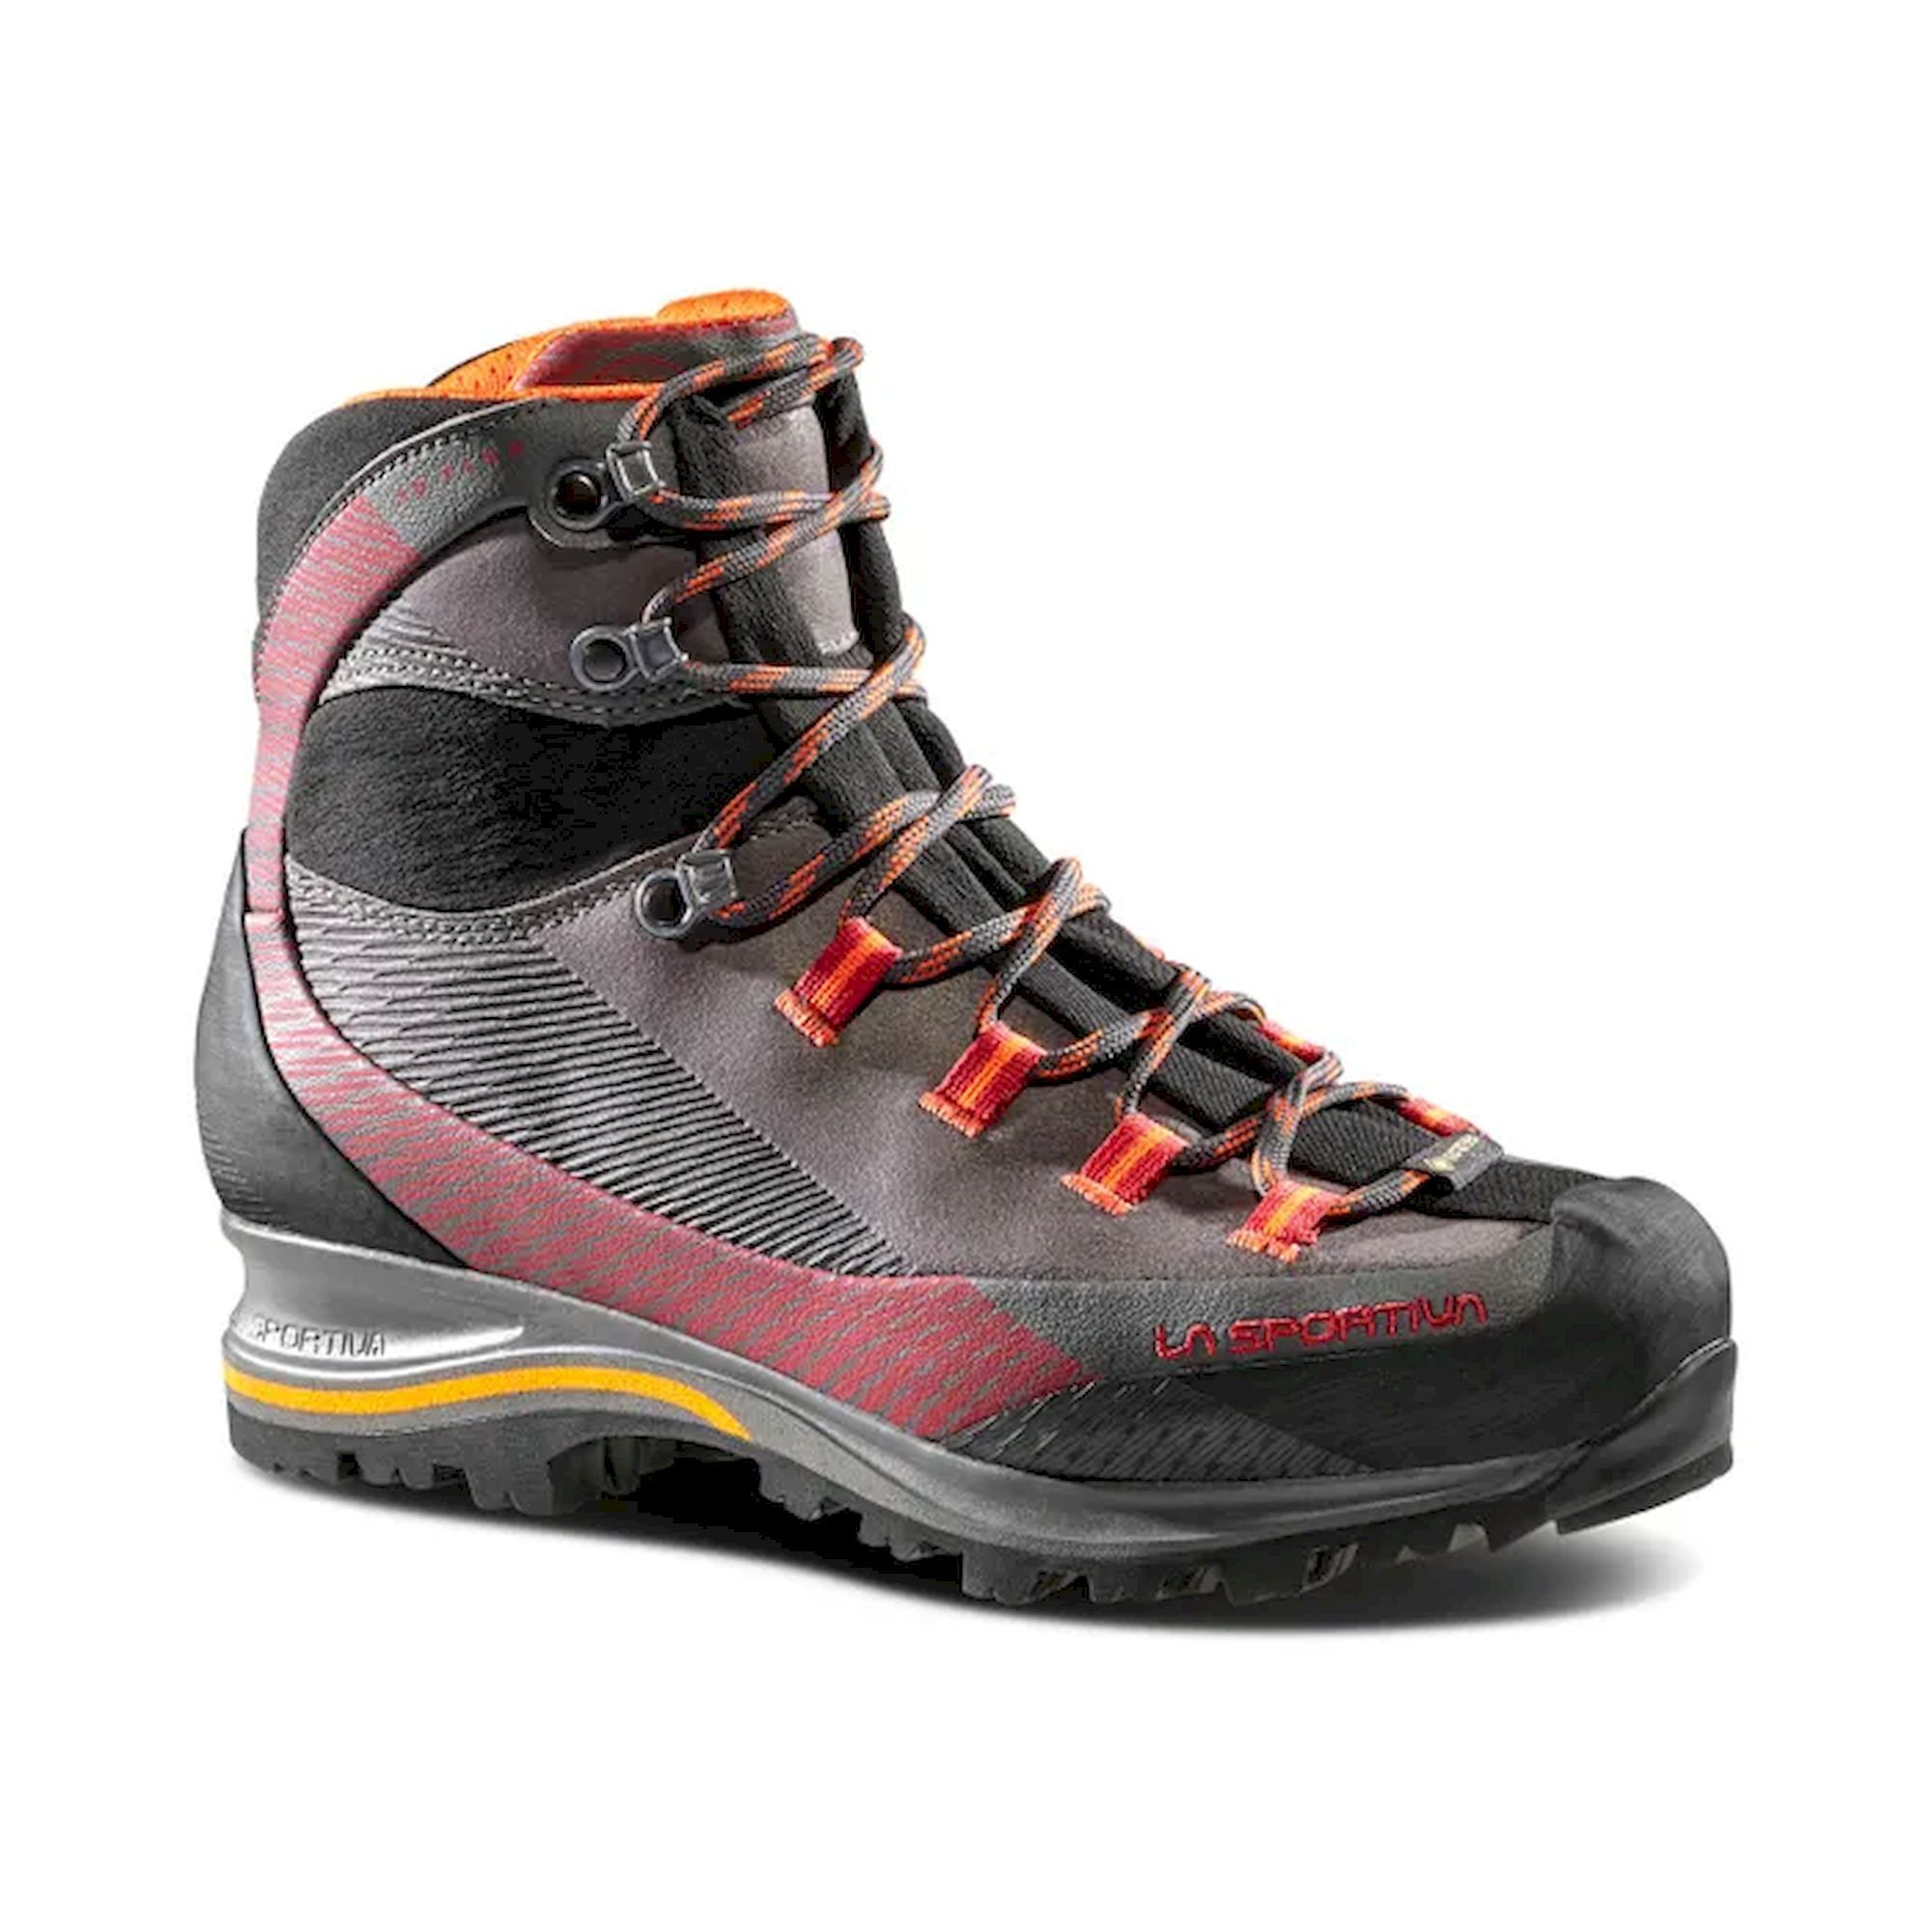 La Sportiva Trango Trk Leather GTX - Hiking Boots - Women's